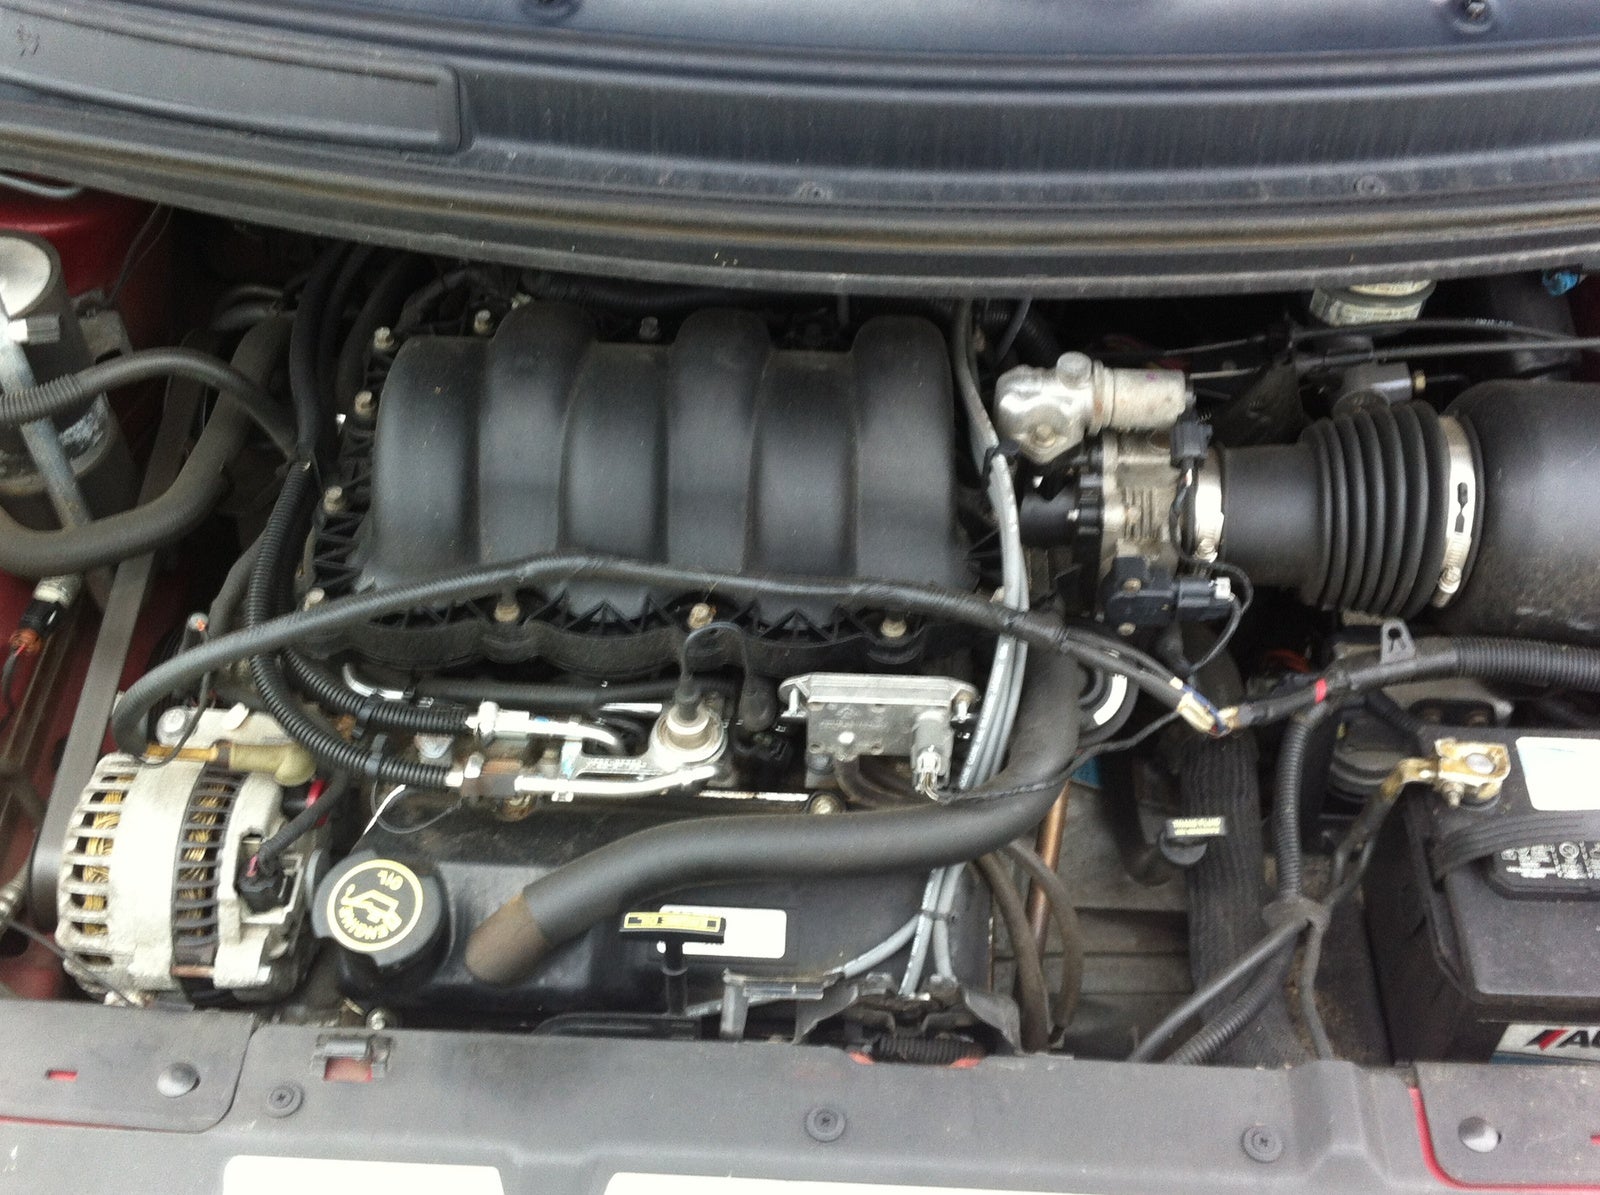 1999 Ford windstar engine problems